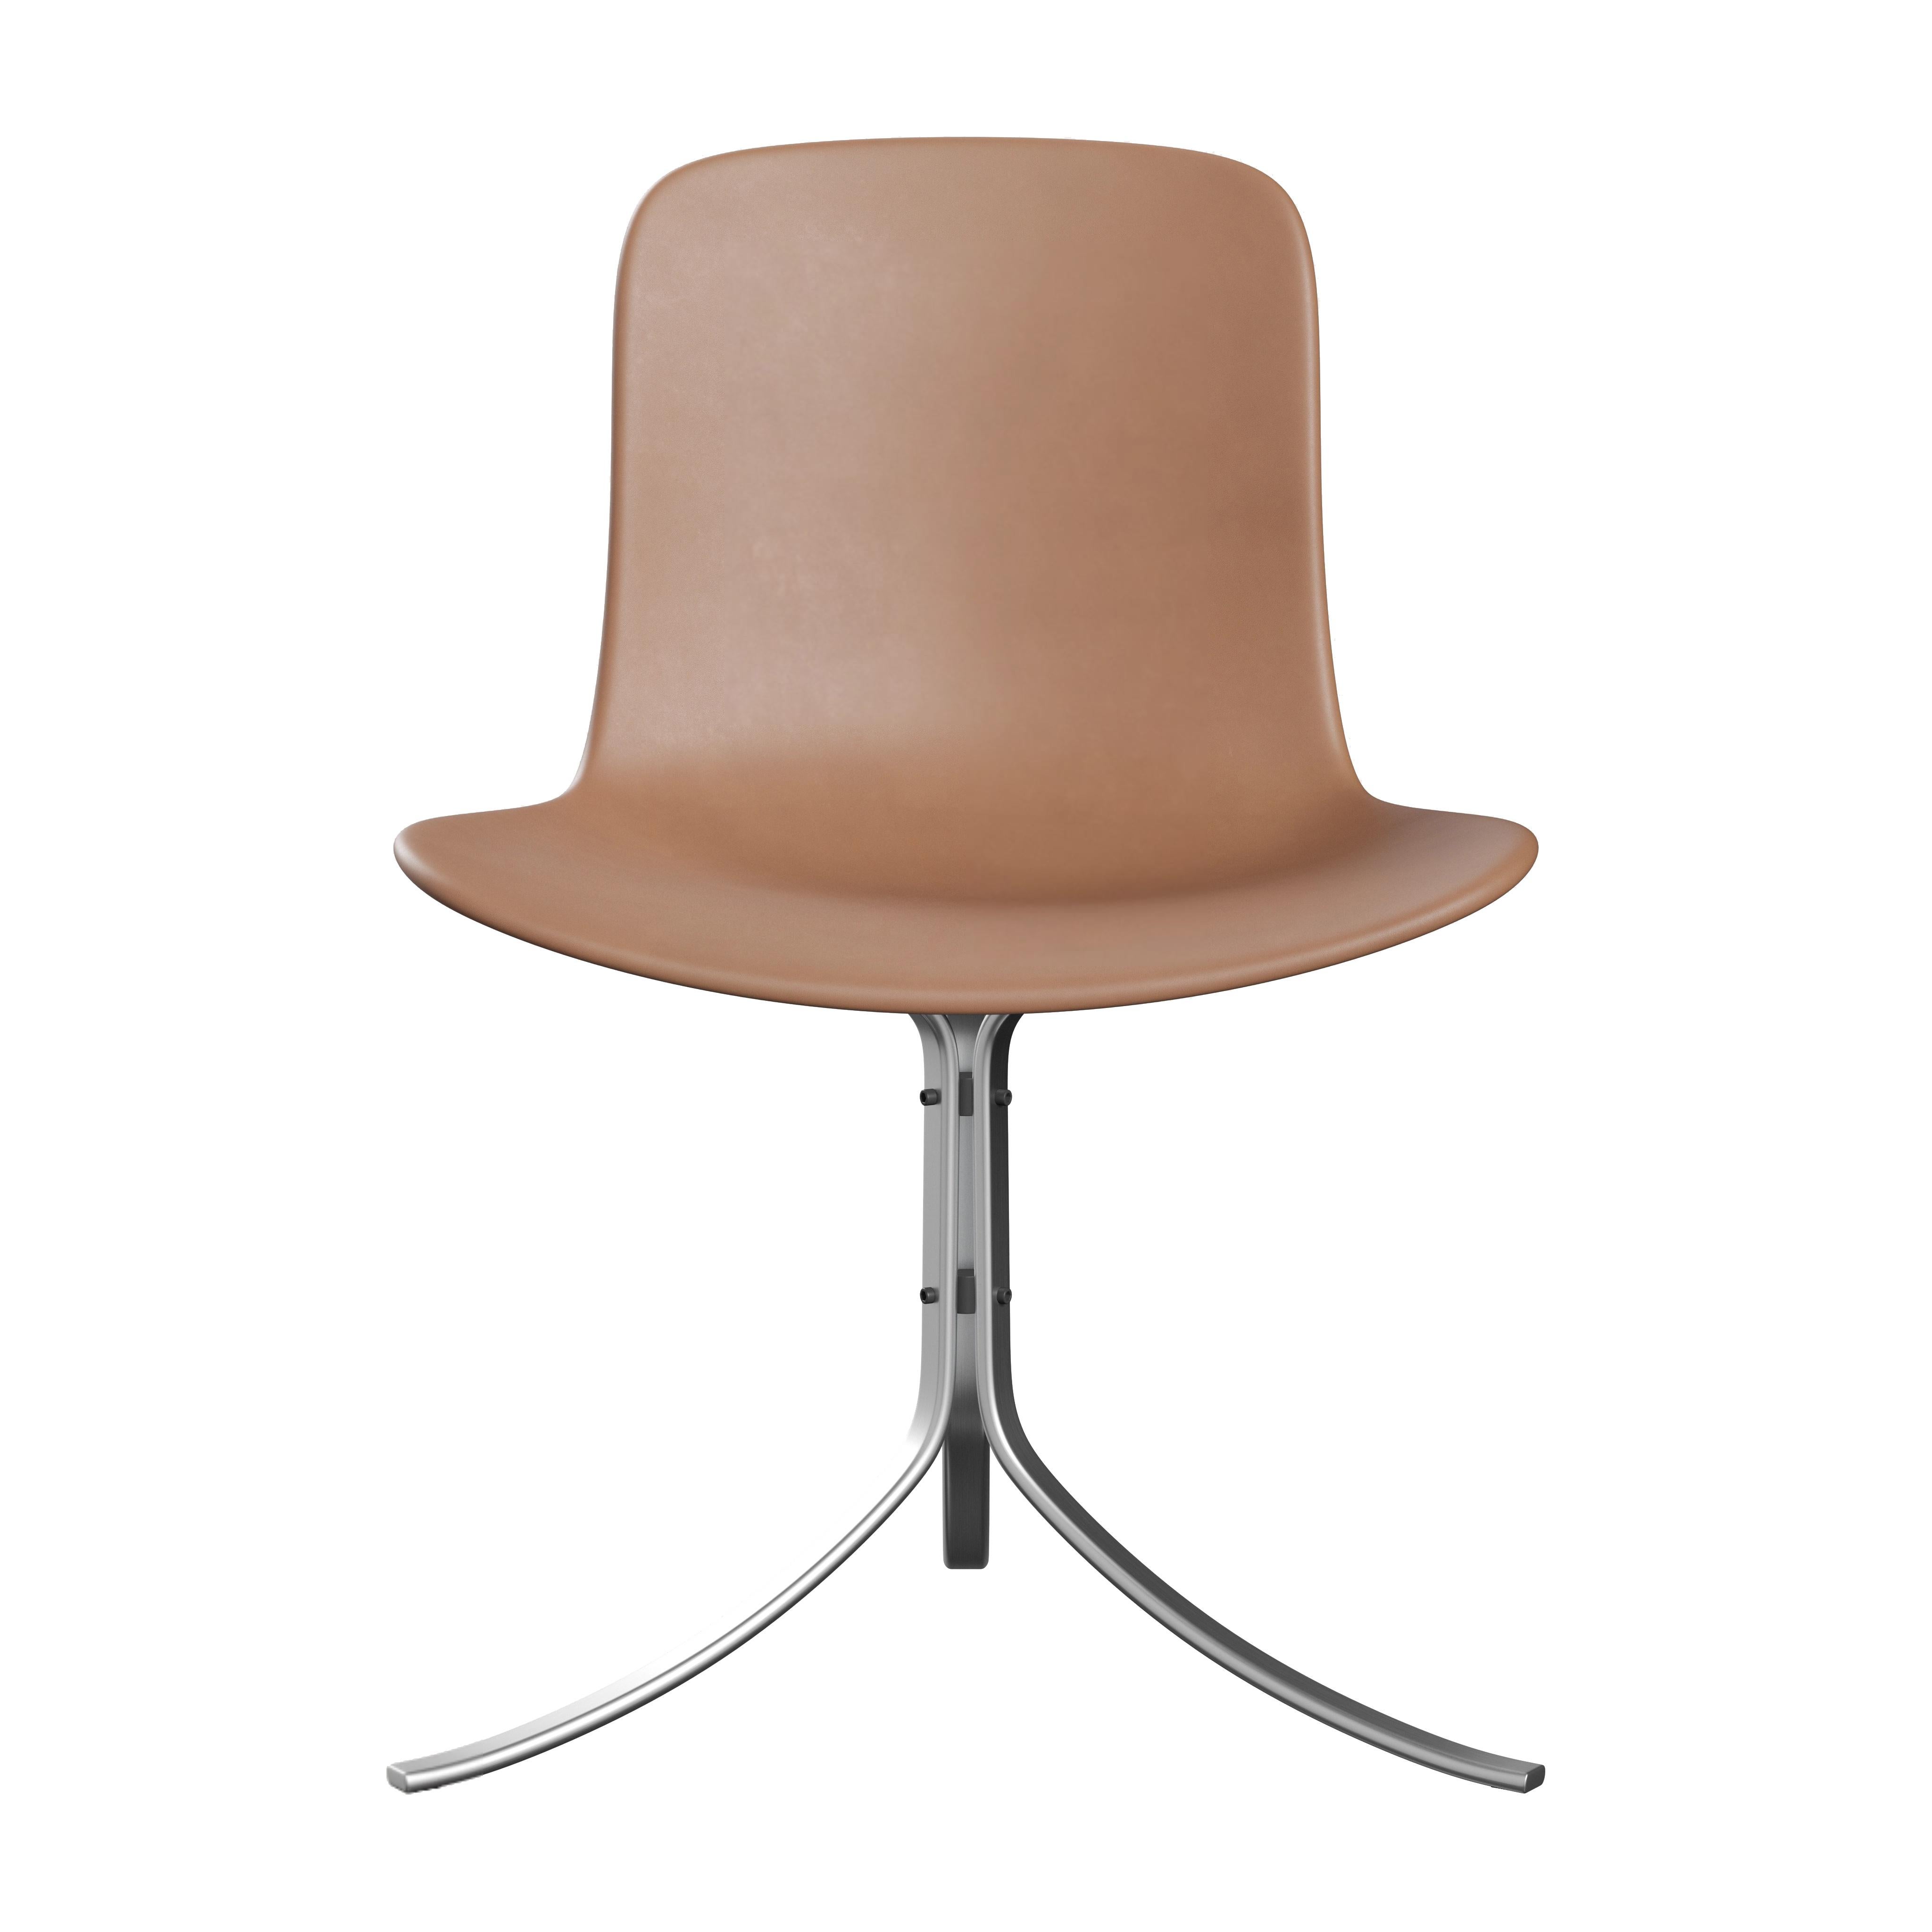 Poul Kjærholm 'PK9' Dining Chair for Fritz Hansen in Leather (Cat. 5) For Sale 8